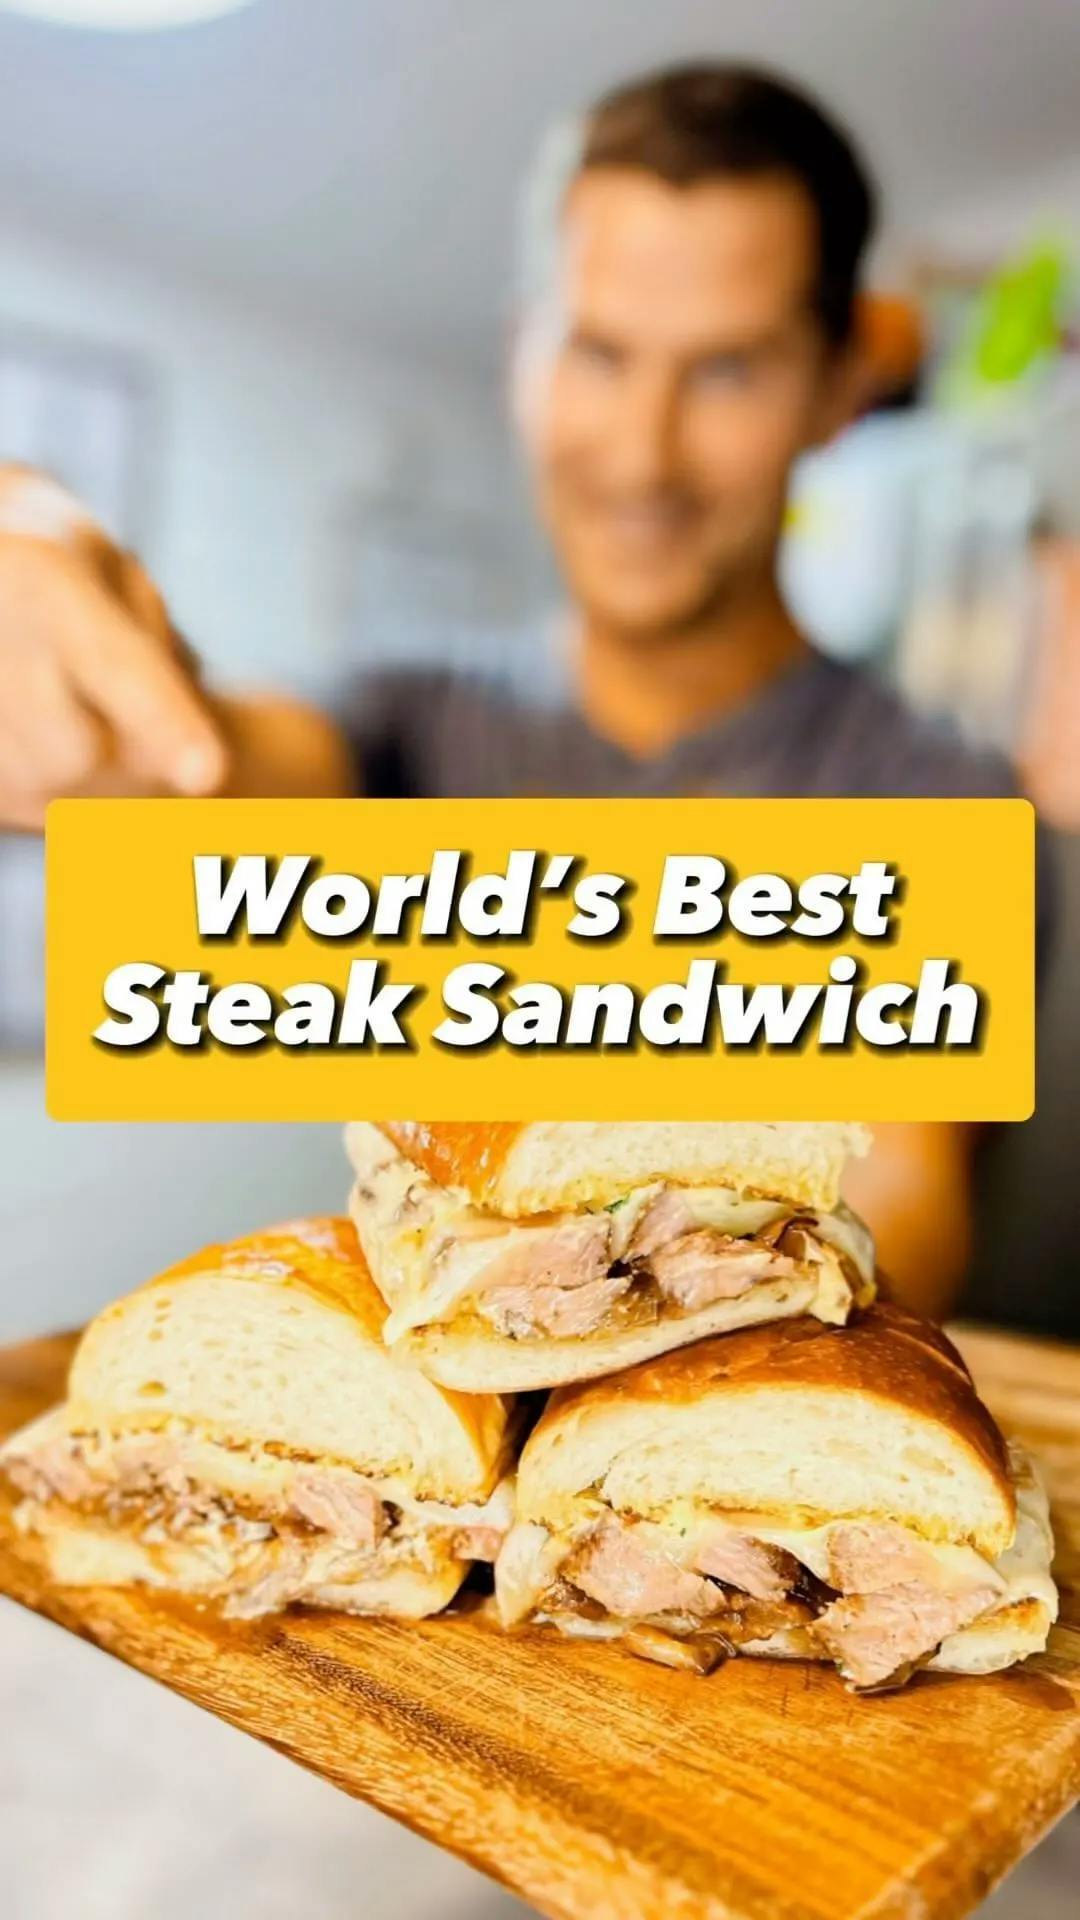 Picture for World's Best Steak Sandwich